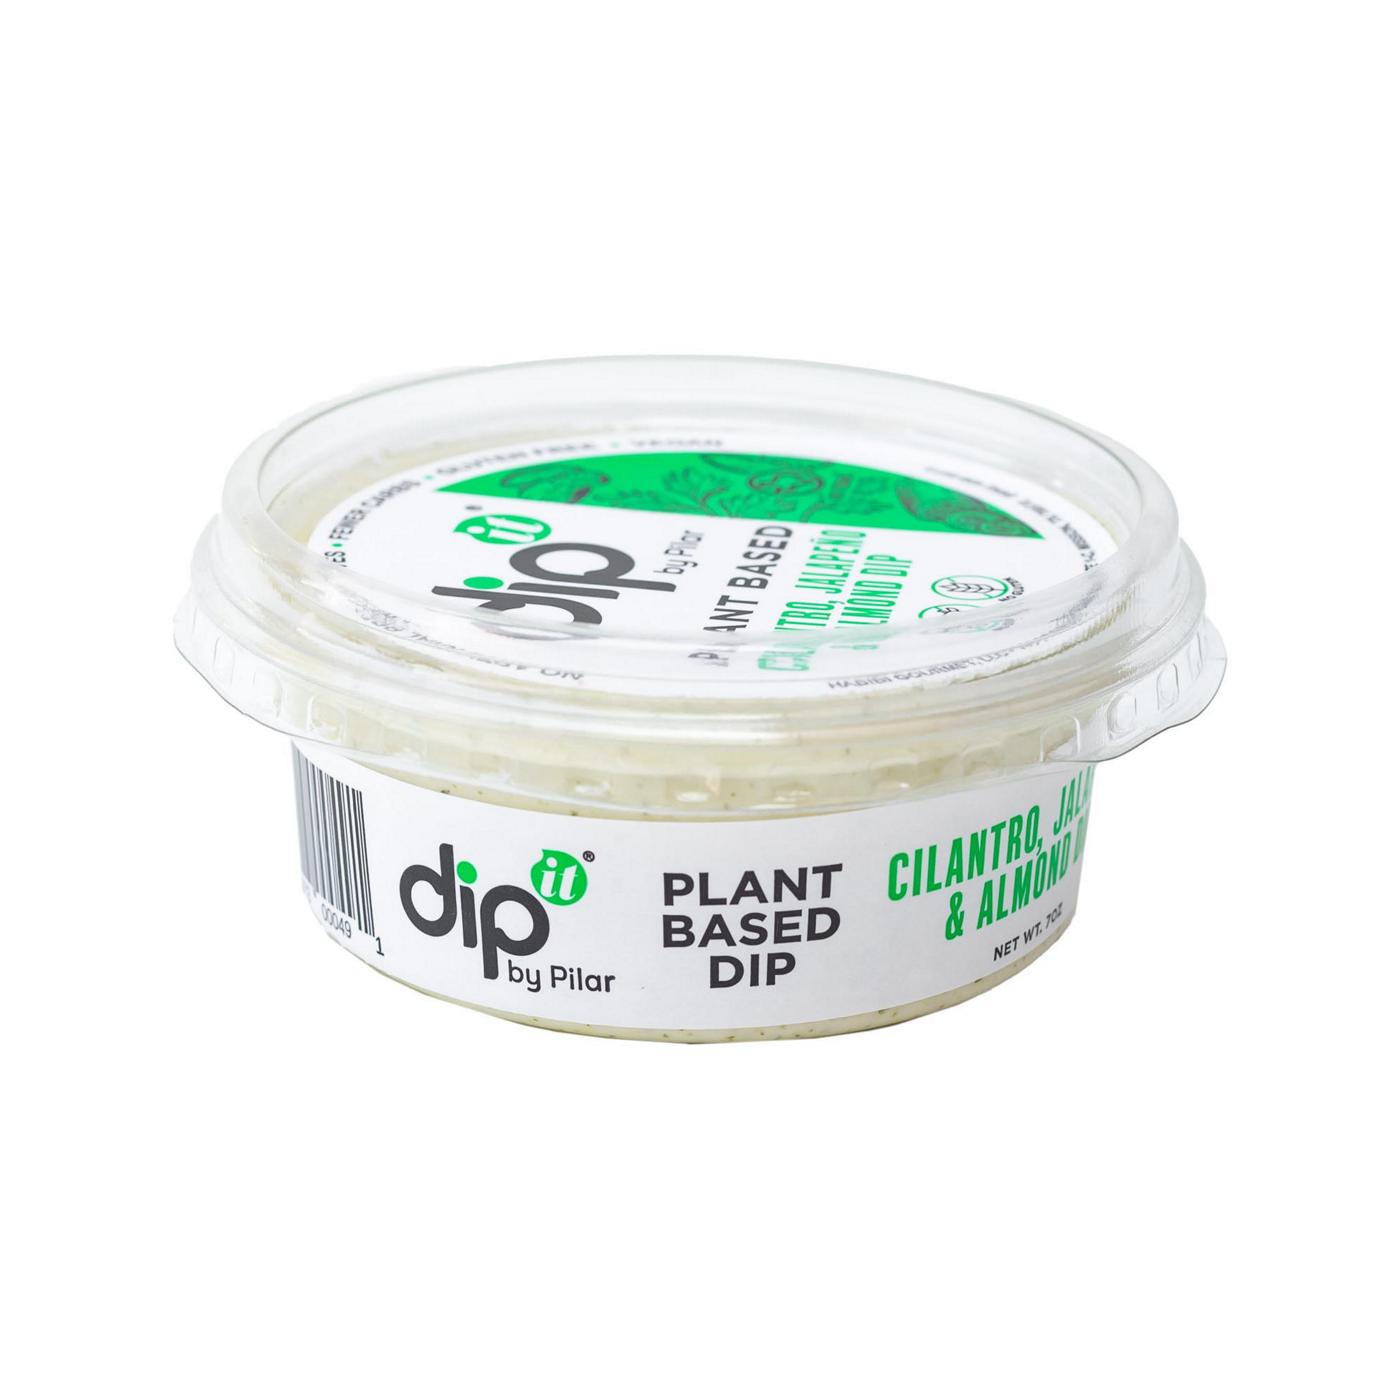 Dip It Plant-Based Cilantro Jalapeno & Almond Dip; image 1 of 2